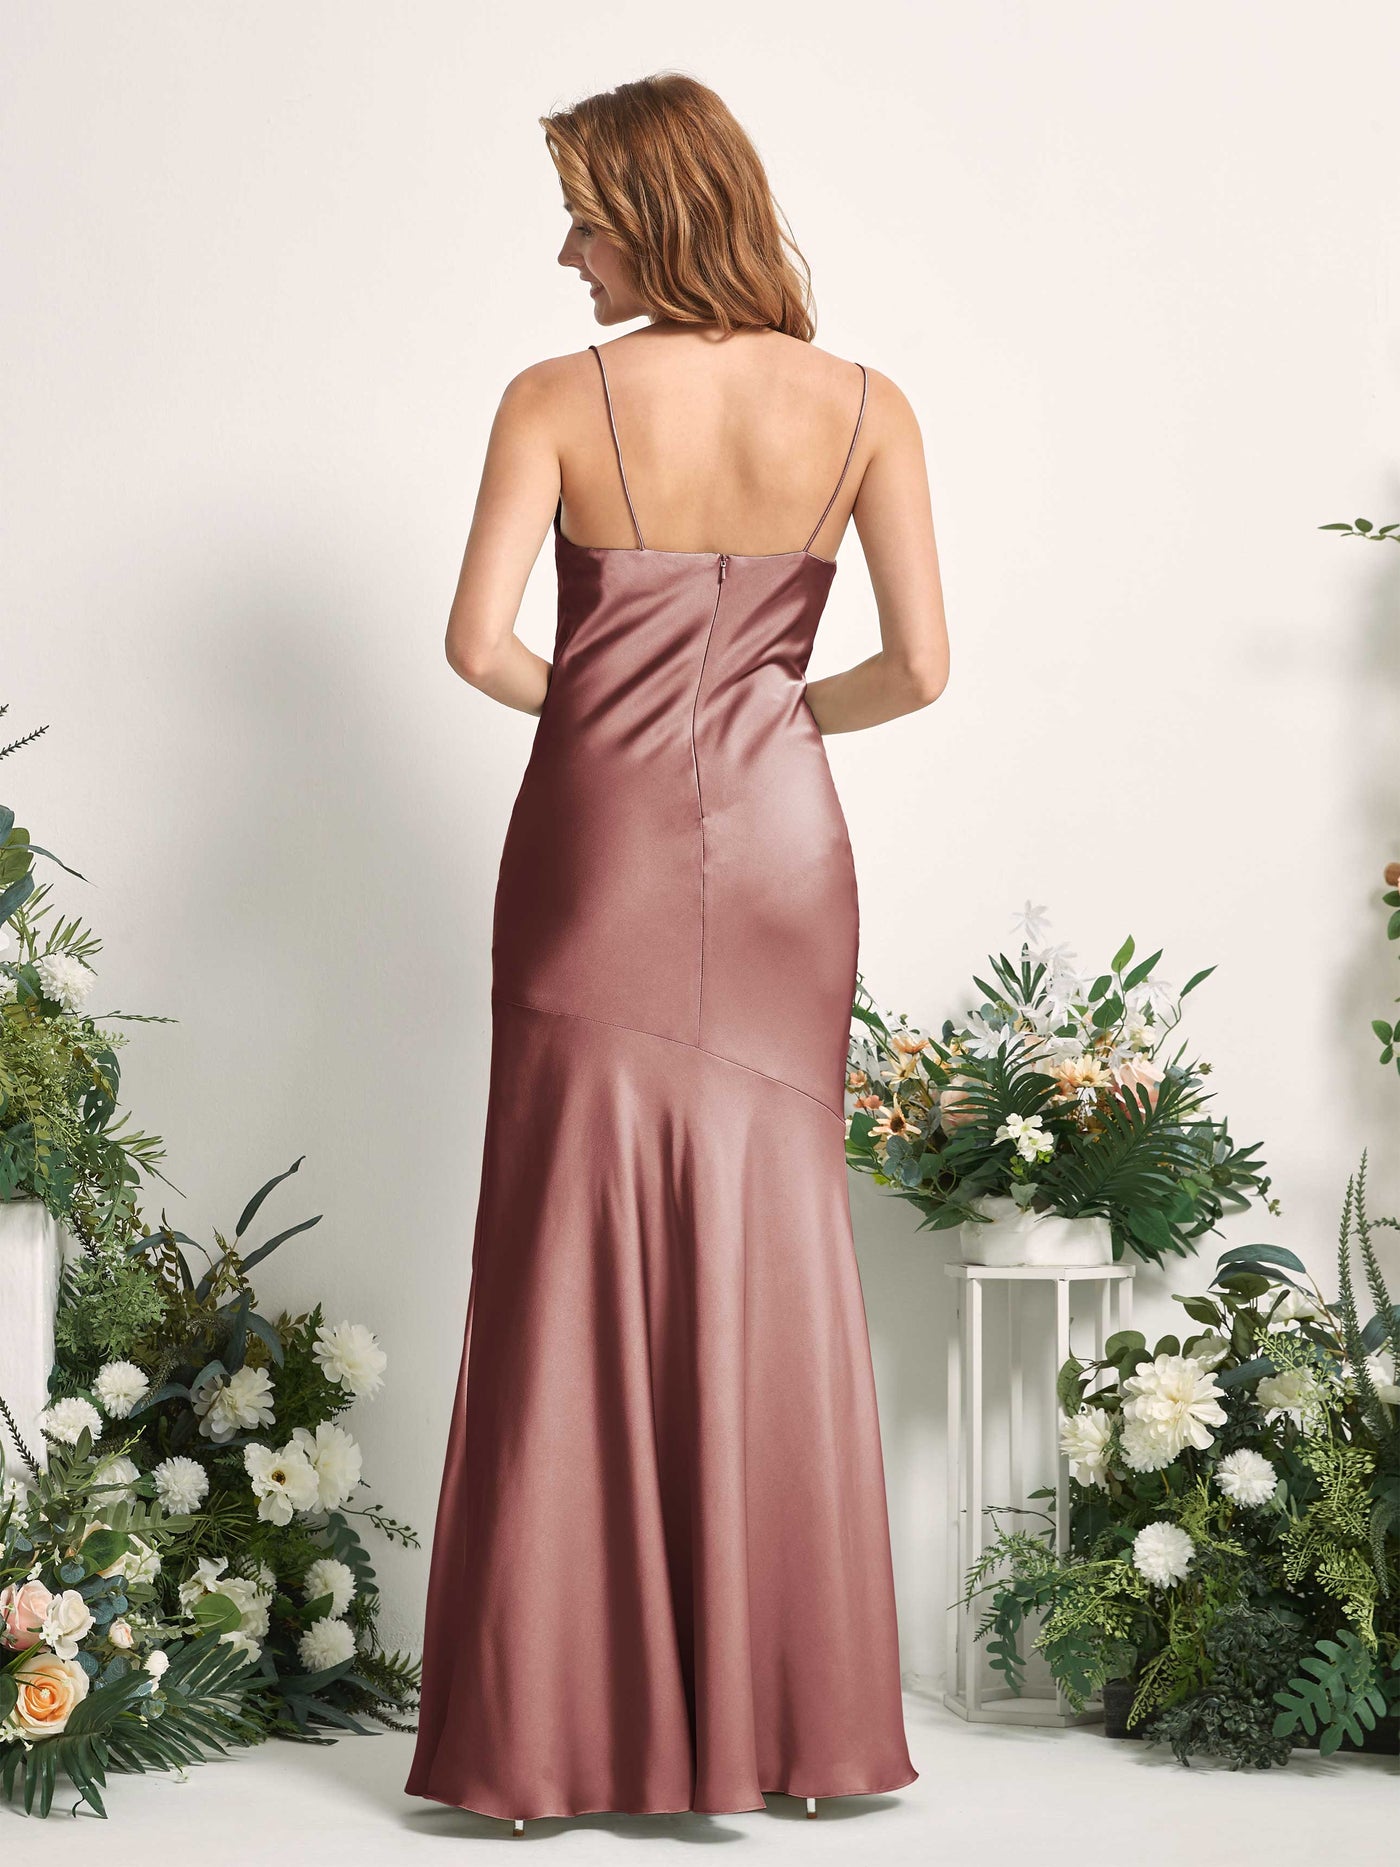 Desert Rose Bridesmaid Dresses Bridesmaid Dress Mermaid/Trumpet Satin Spaghetti-straps Full Length Sleeveless Wedding Party Dress (80225617)#color_desert-rose